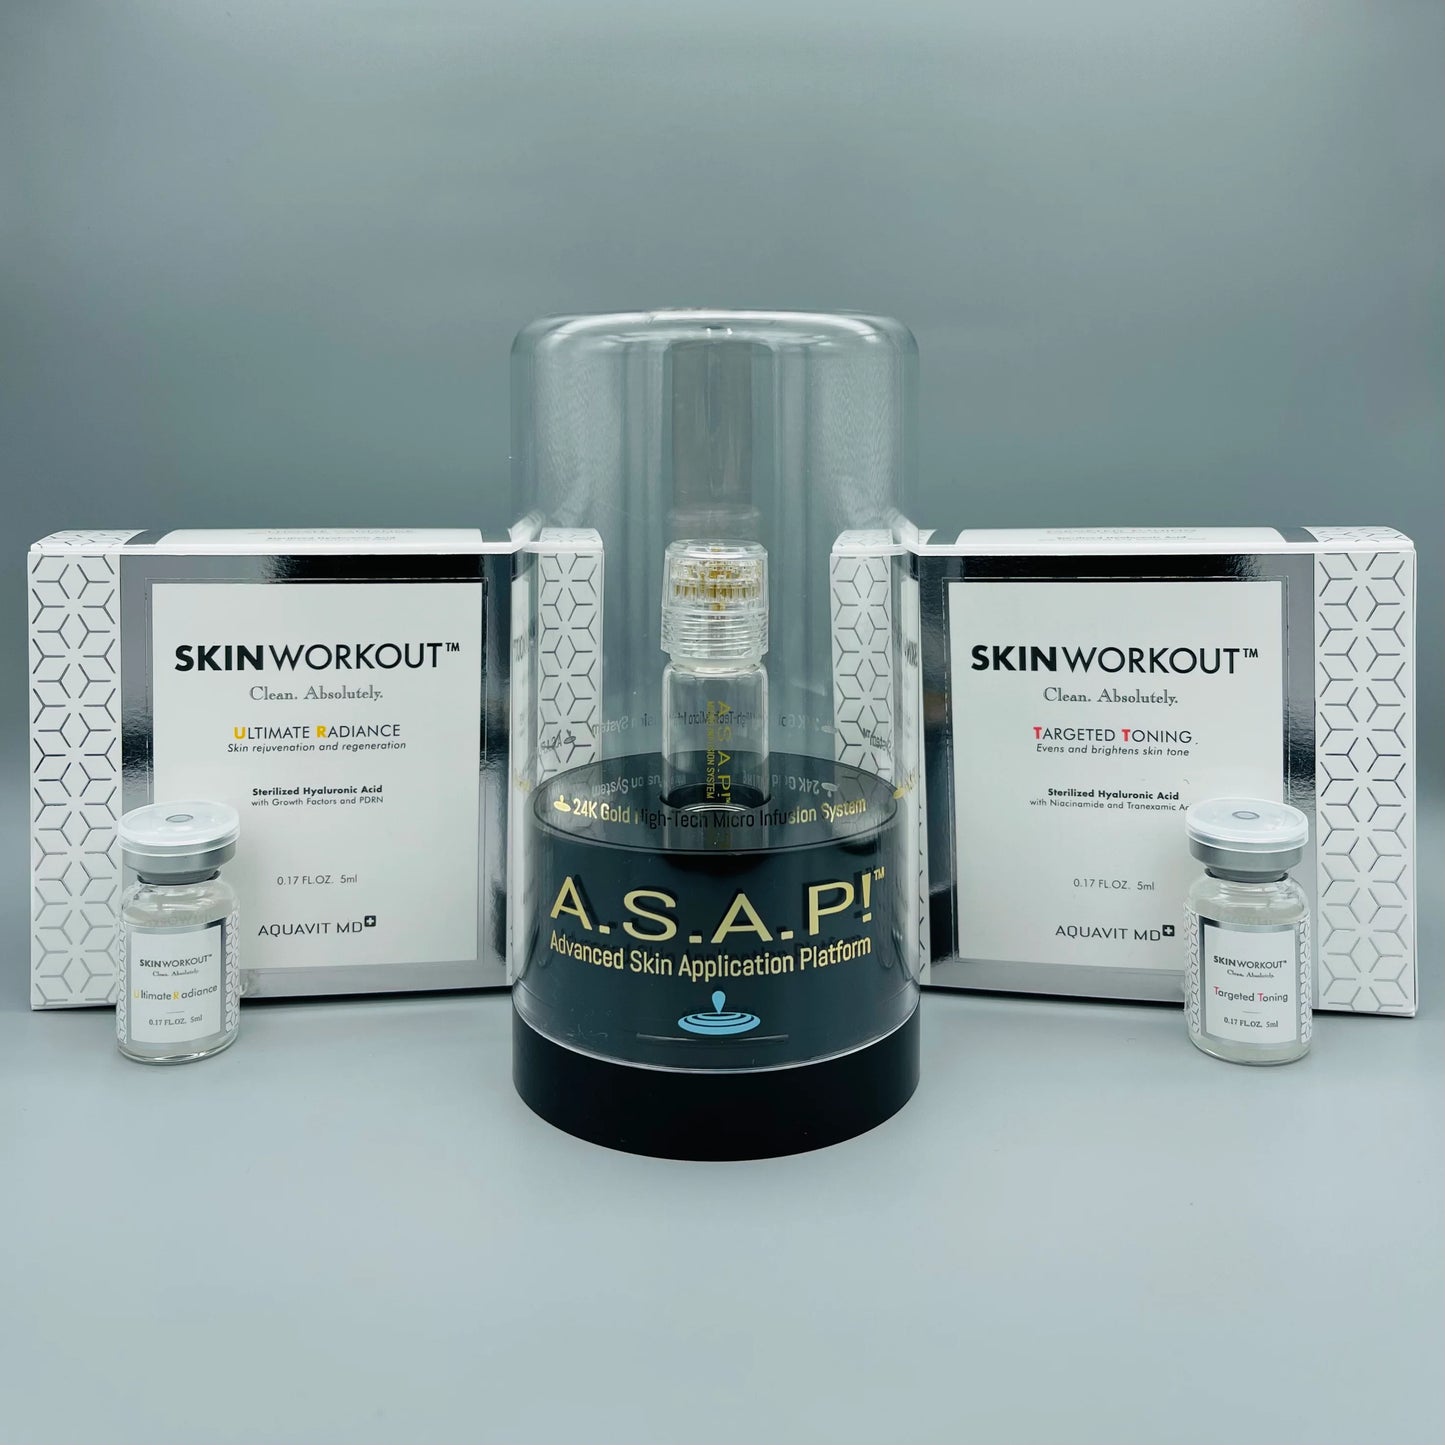 Aquavit- SKINWORKOUT A.S.A.P!  24K Gold Skincare Device